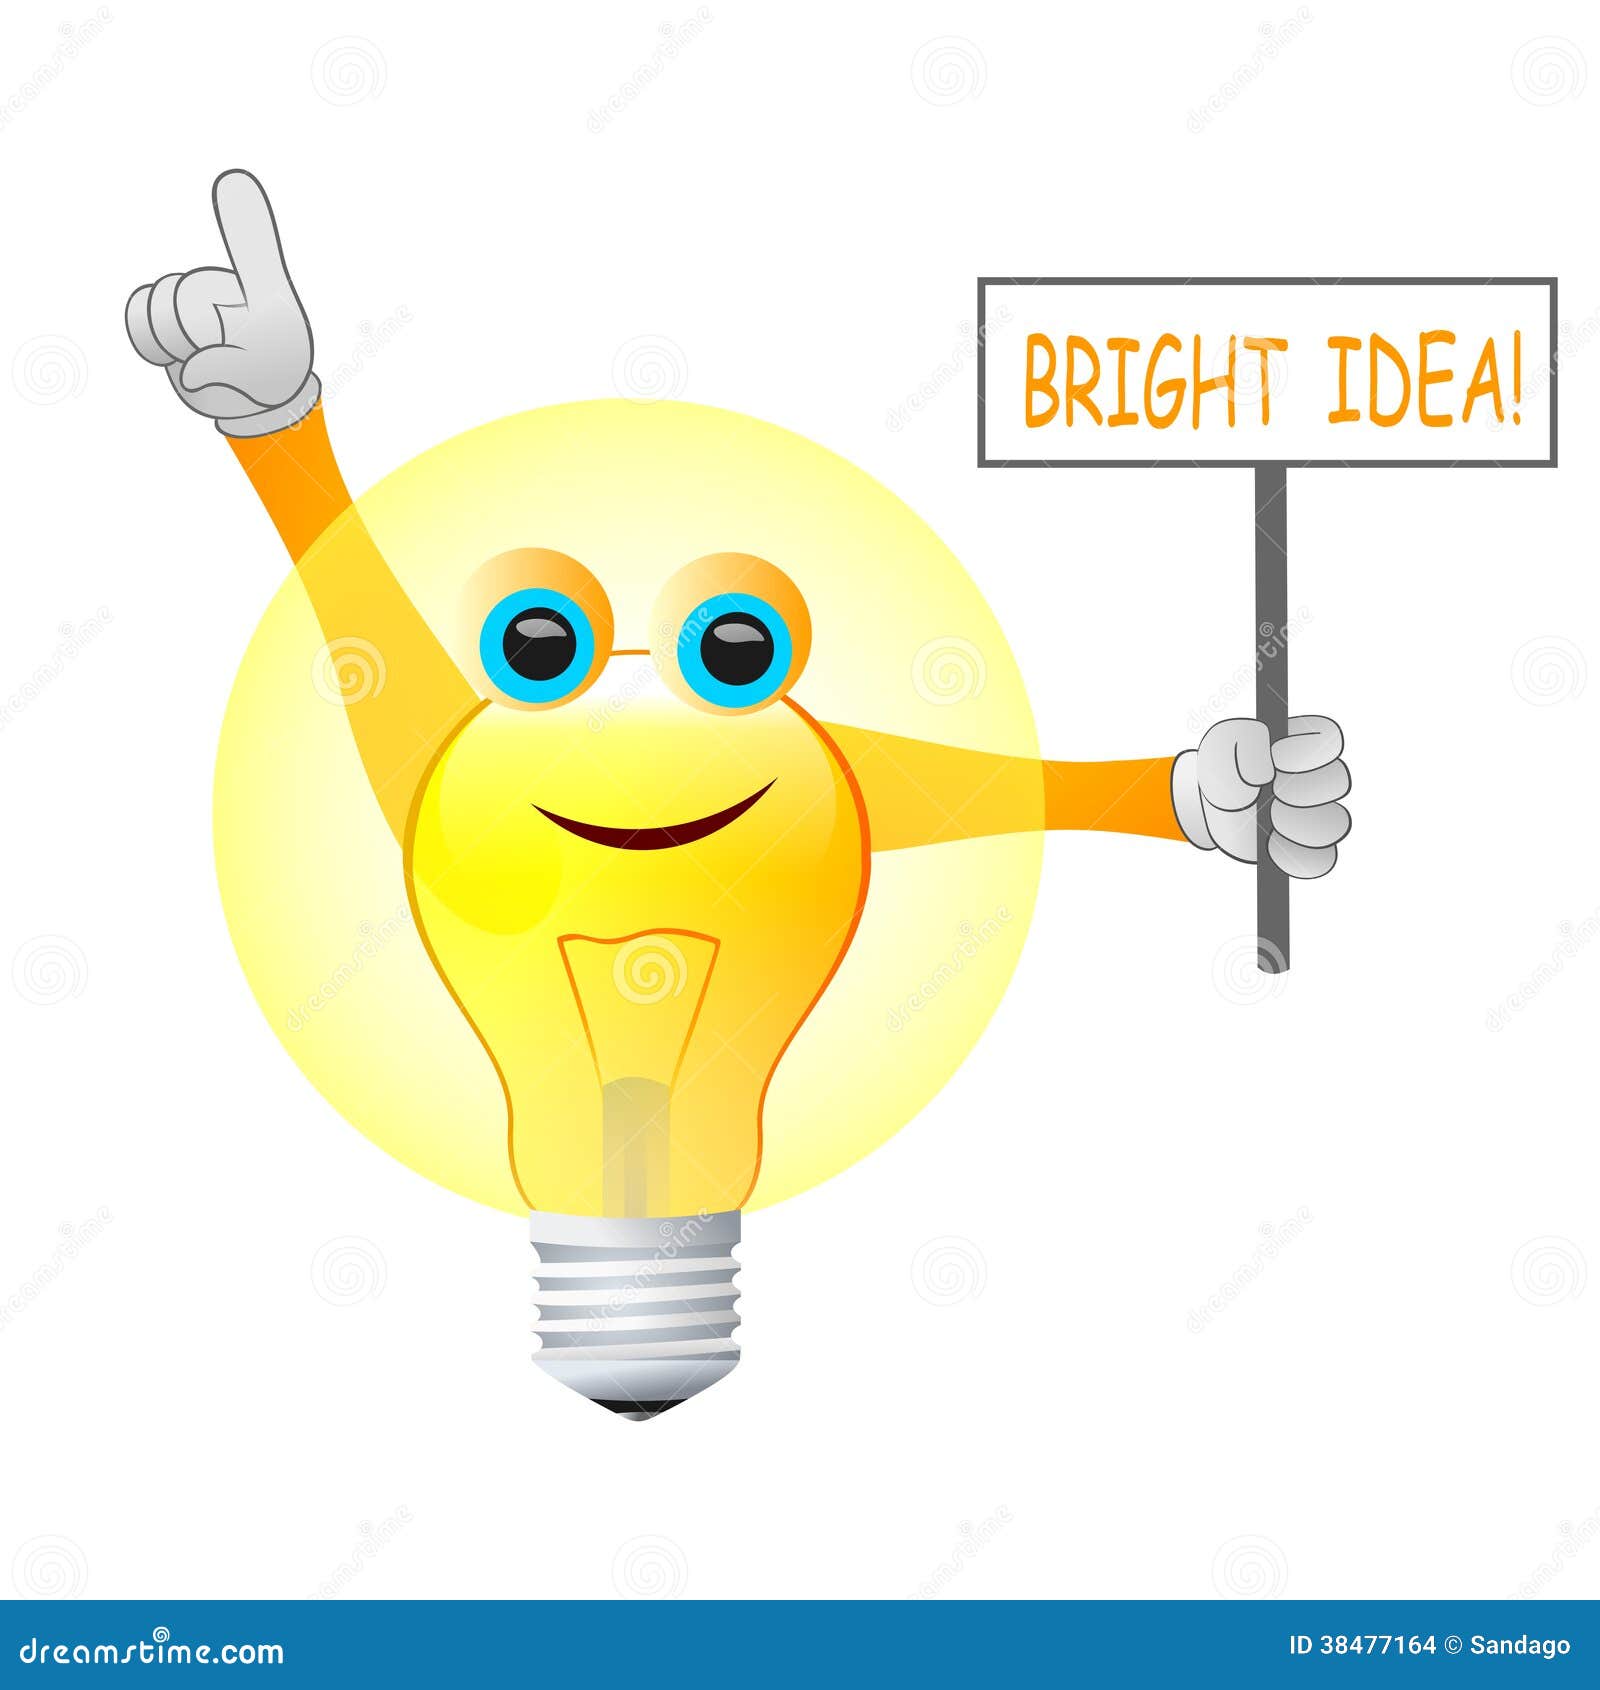 bright-idea-light-bulb-vector-illustrati